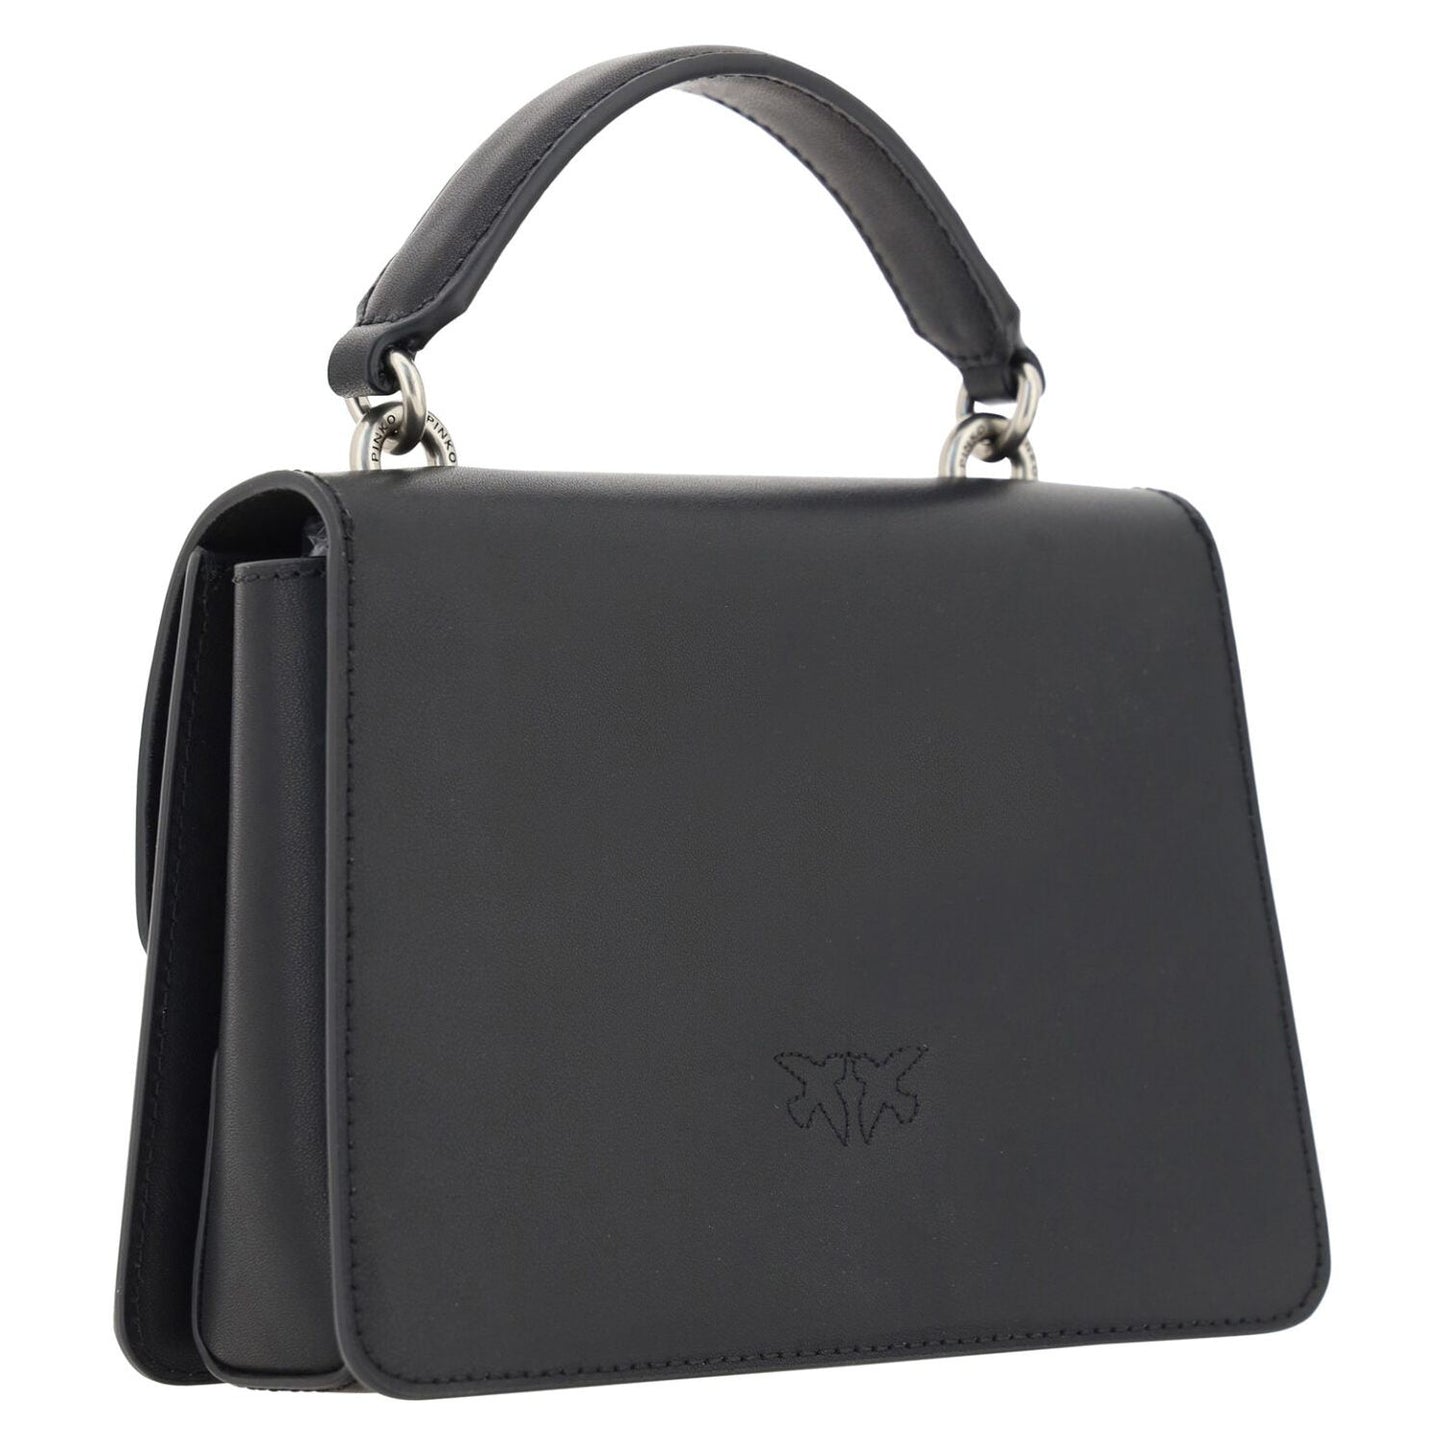 PINKO Elegant Black Calfskin Shoulder Handbag black-calf-leather-love-one-classic-handbag 0C2DA239-B4FC-465A-8154-E8F2EF8C8AAB-scaled-5364729d-381.jpg